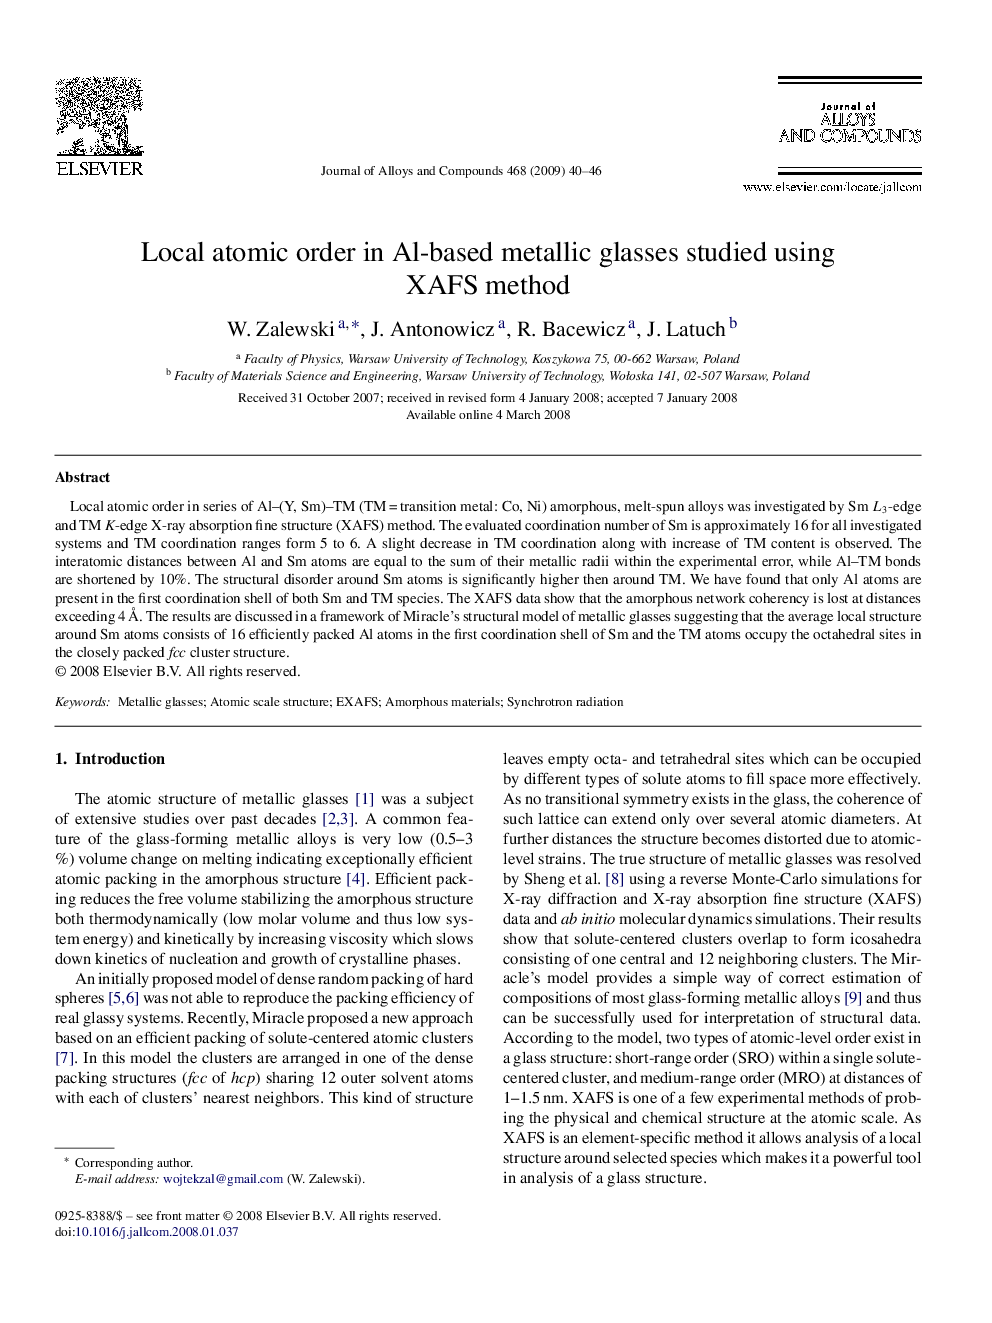 Local atomic order in Al-based metallic glasses studied using XAFS method